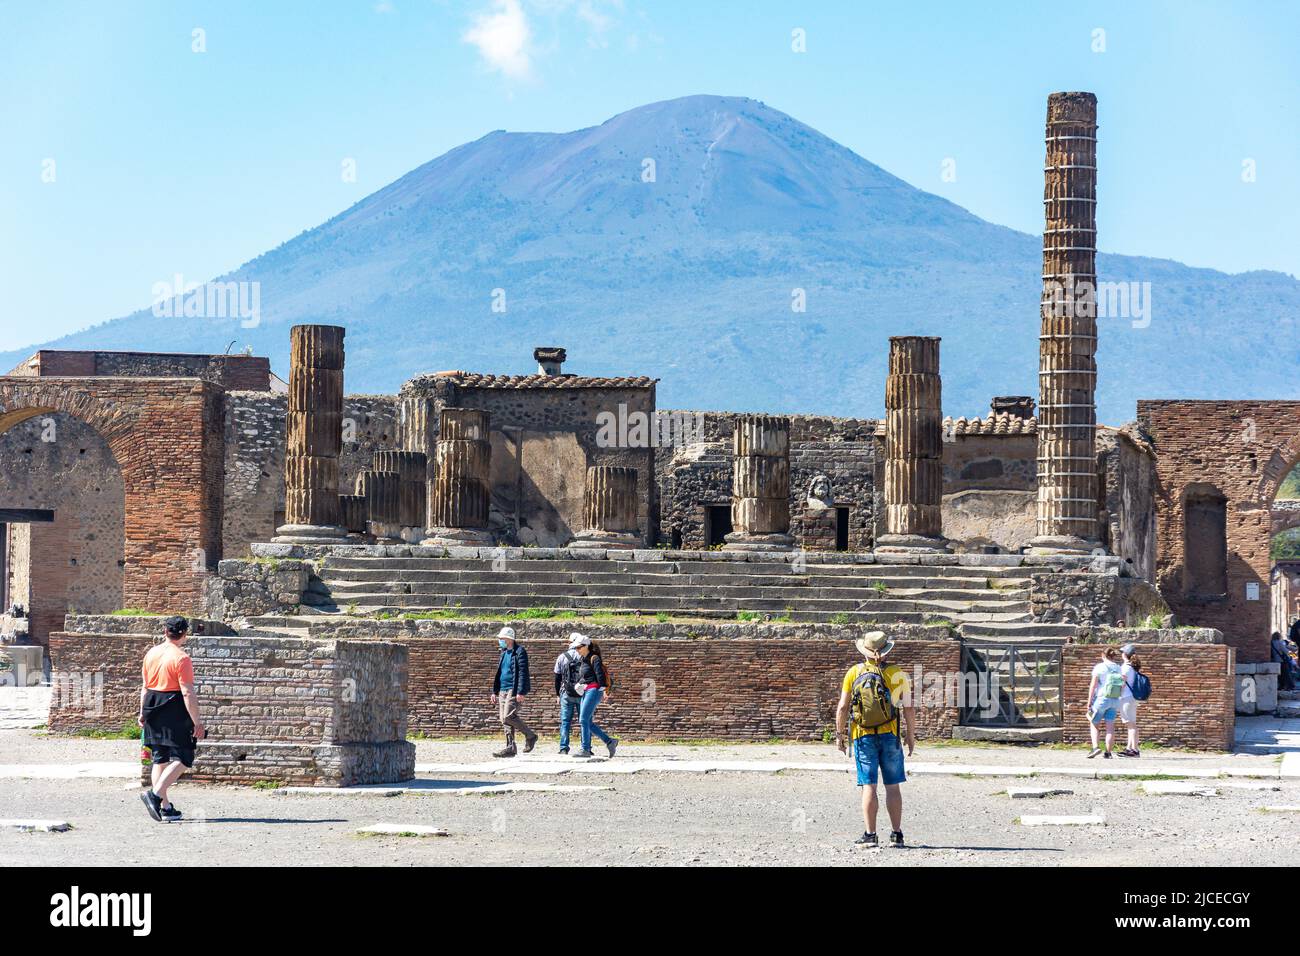 Der Tempel des Jupitors (Capitolium) mit dem Vesuv dahinter, die antike Stadt Pompeji, Pompeji, die Metropolstadt Neapel, die Region Kampanien, Italien Stockfoto